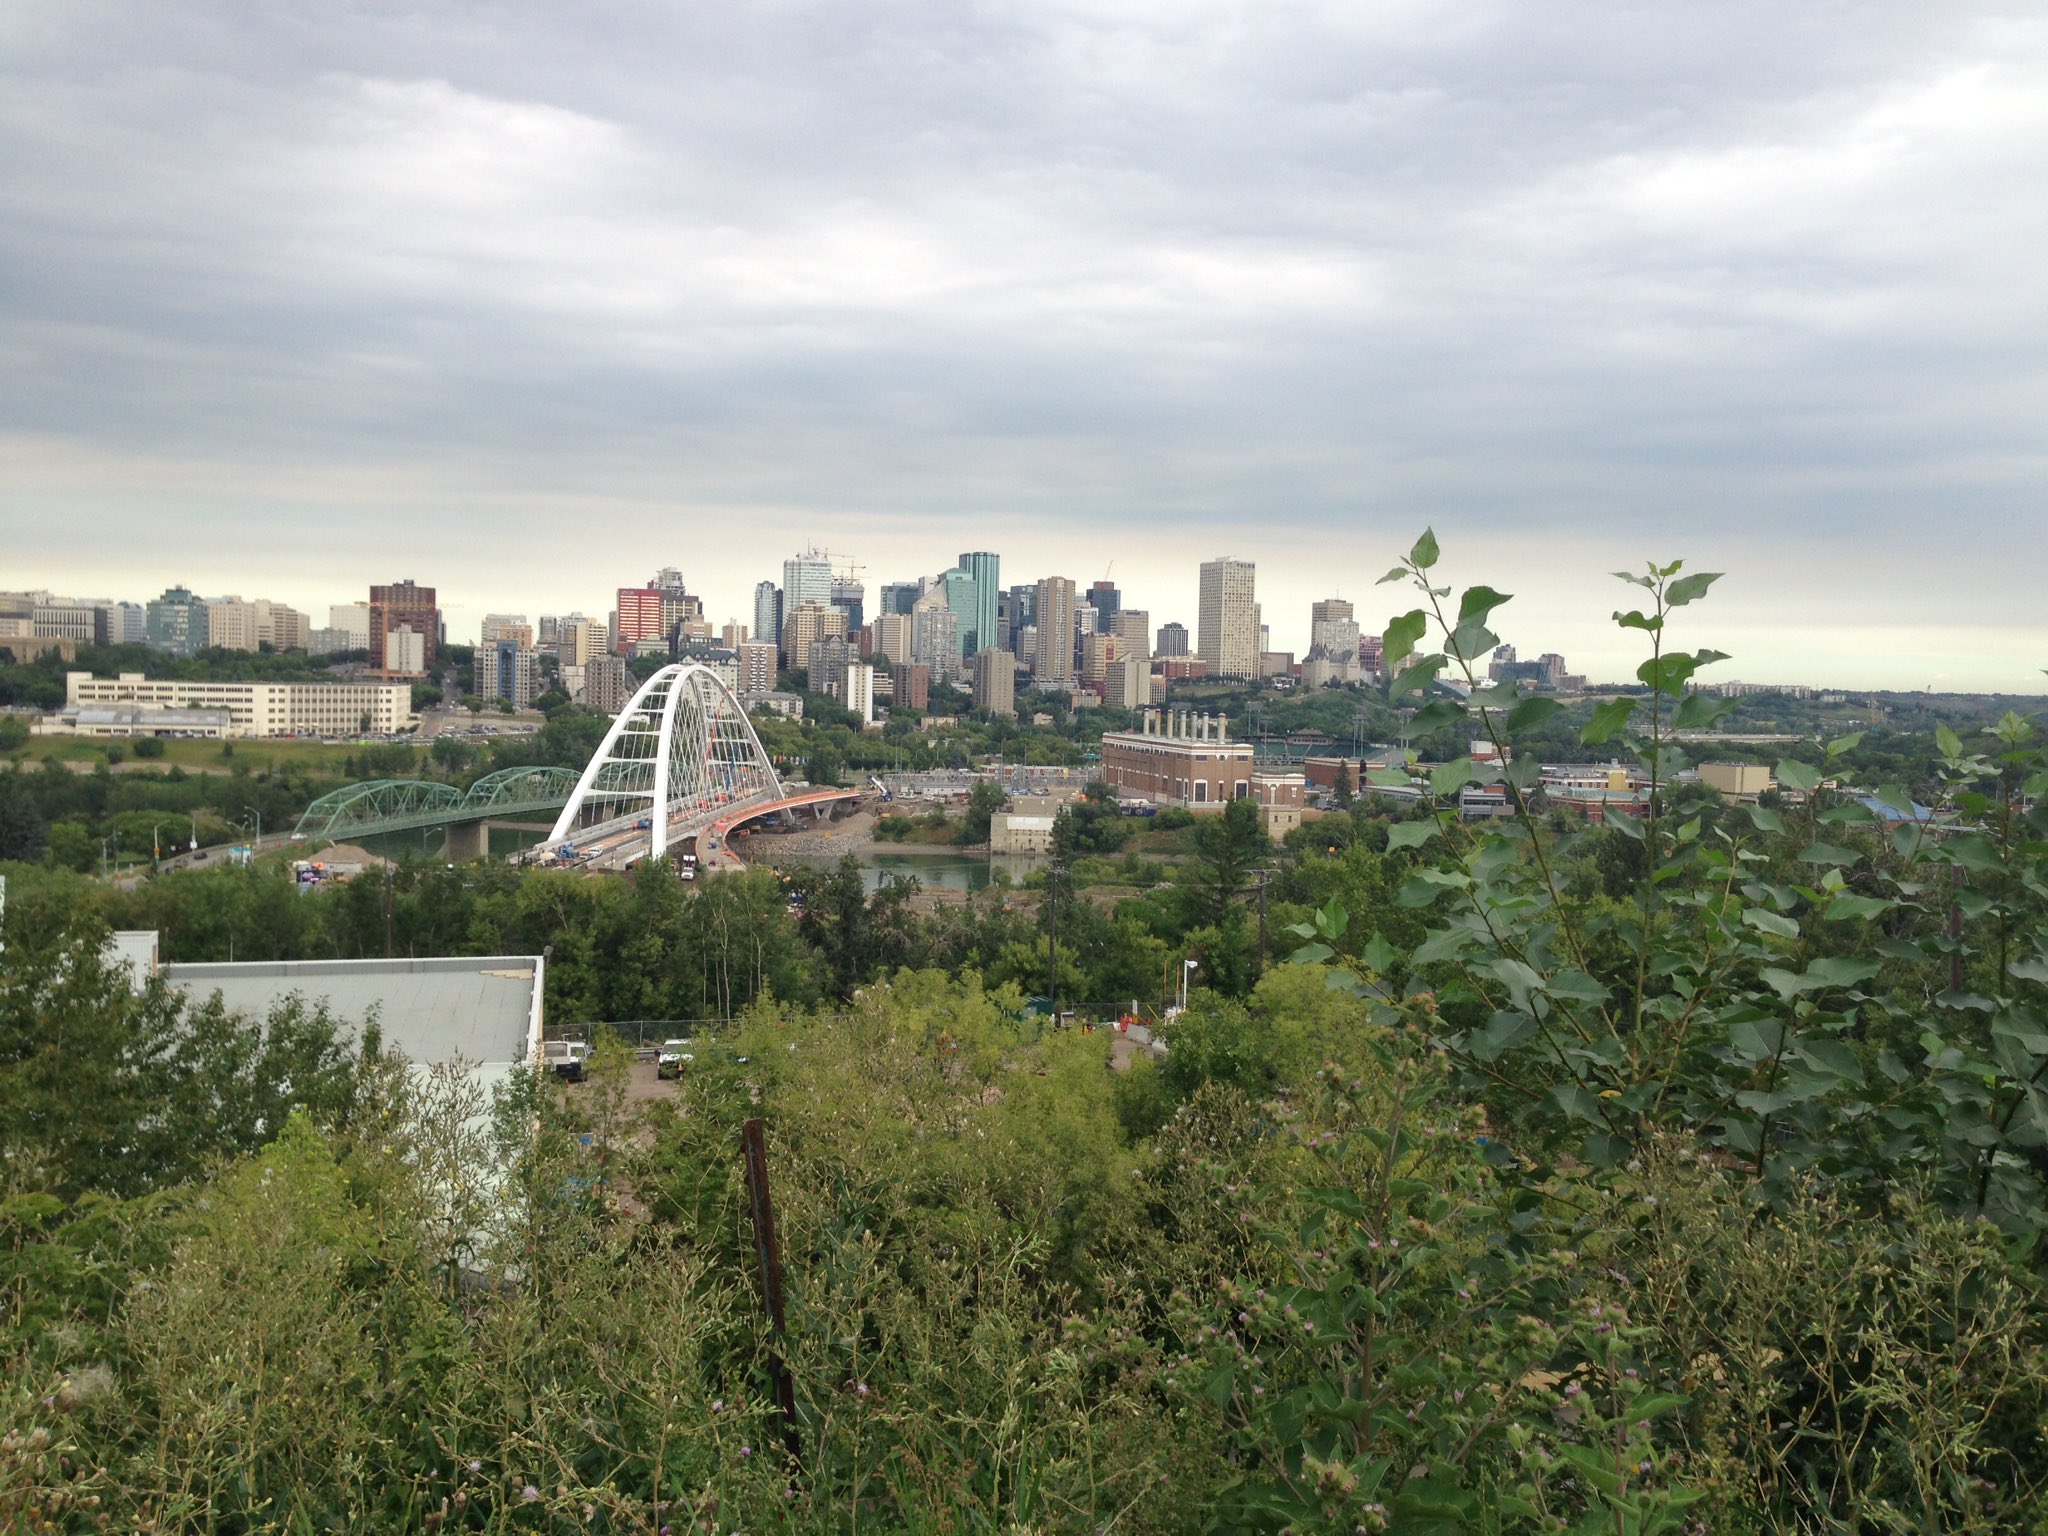 orașul Edmonton skyline, văzut din Saskatchewan Drive pe 31 iulie 2017.